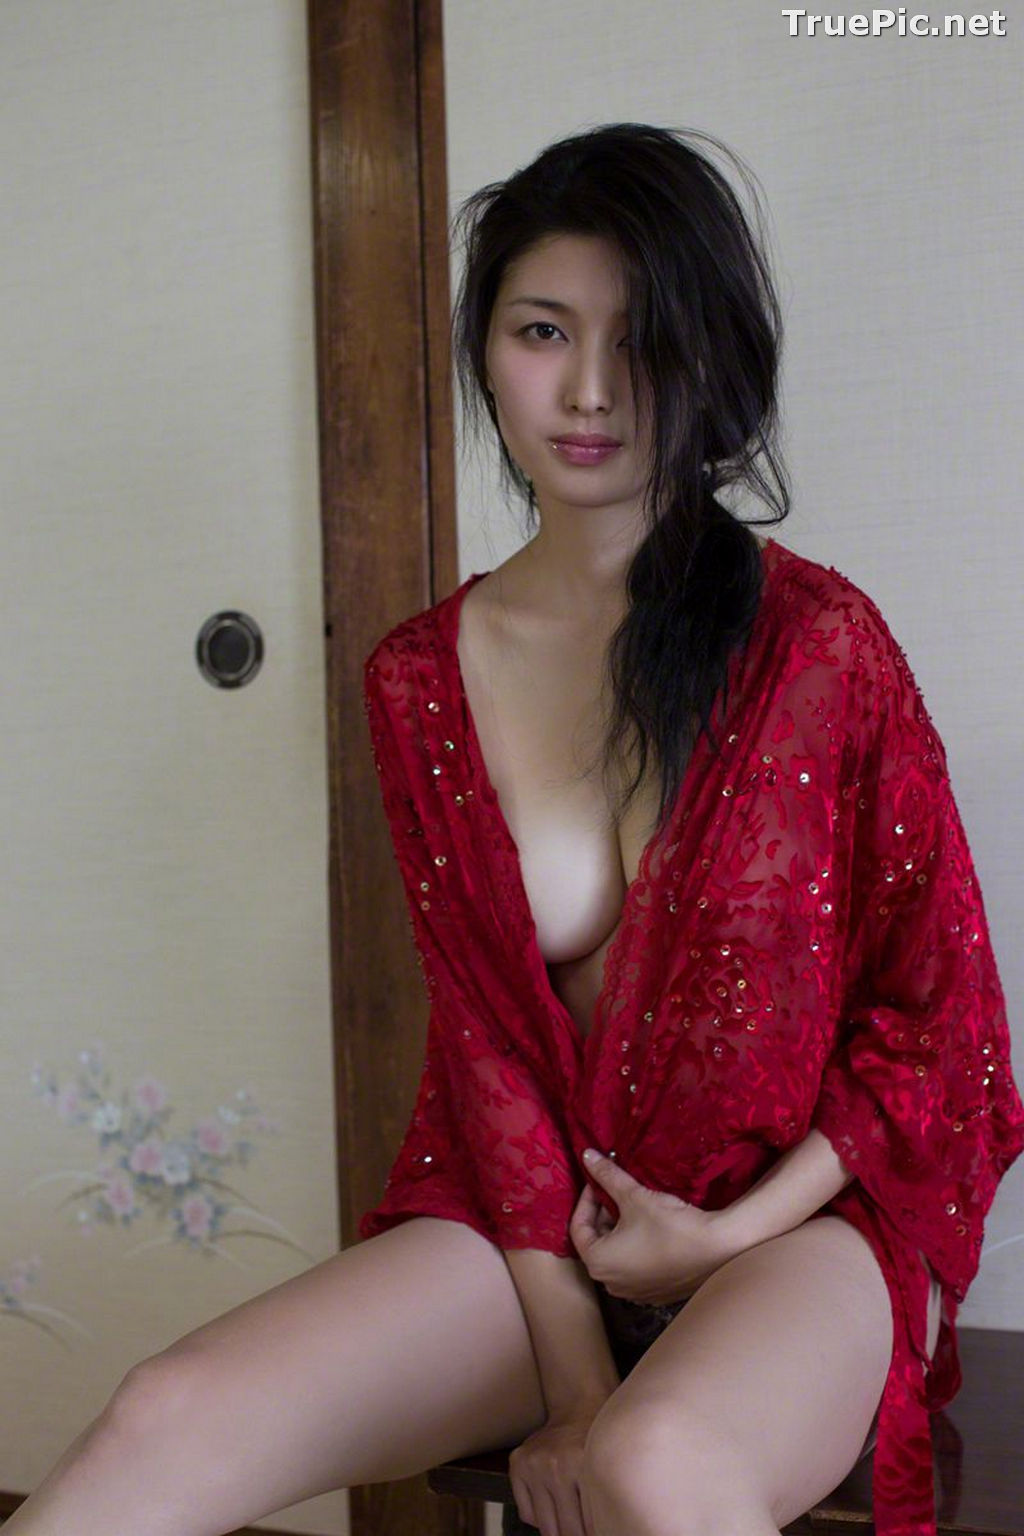 Image Wanibooks No.124 - Japanese Gravure Idol and Actress - Manami Hashimoto - TruePic.net - Picture-180